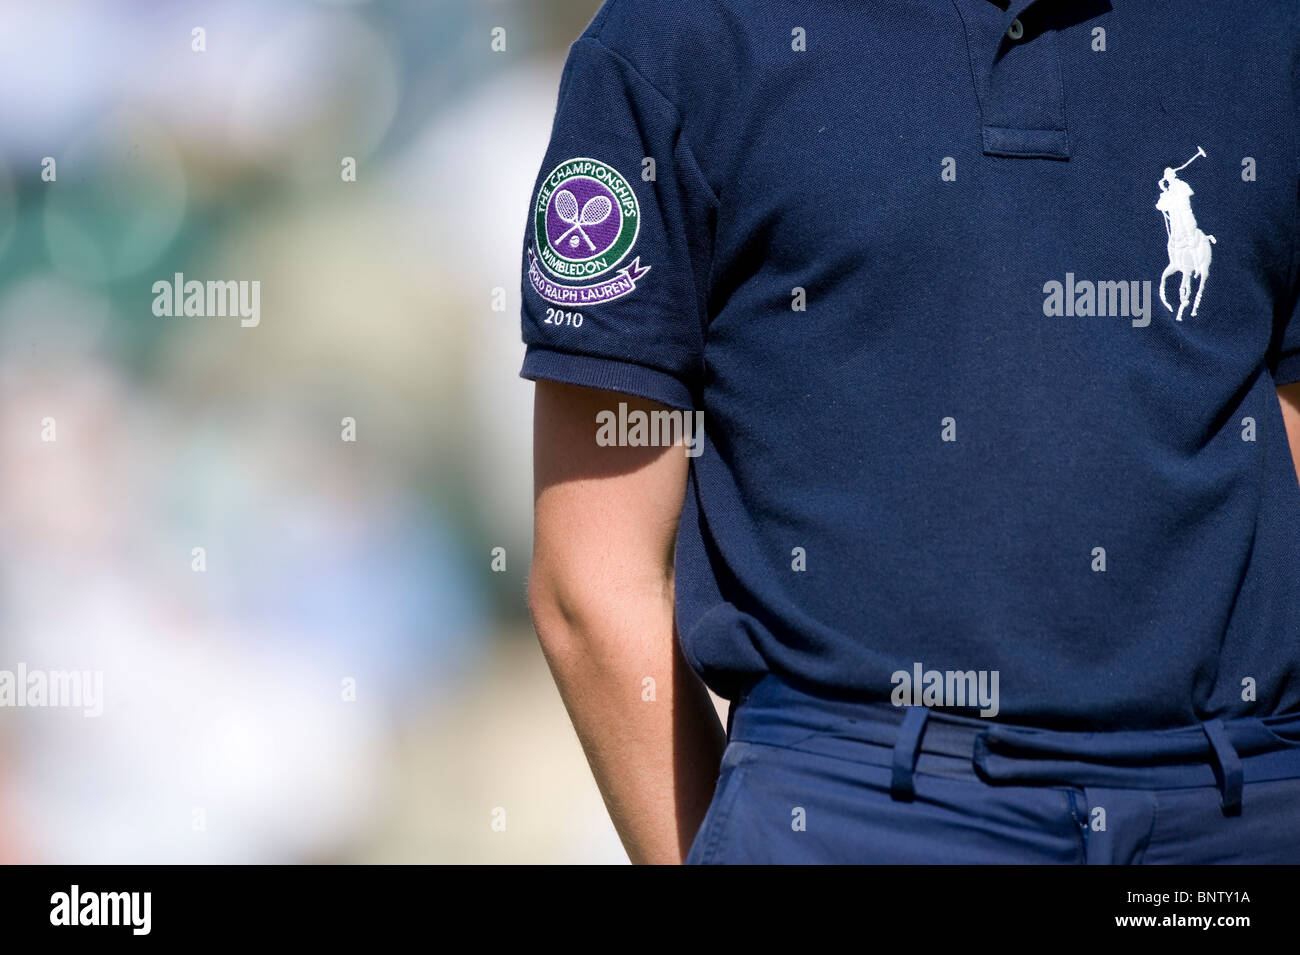 Ball boy camiseta detalle de corte 1 durante los Campeonatos de Tenis de Wimbledon 2010 Foto de stock